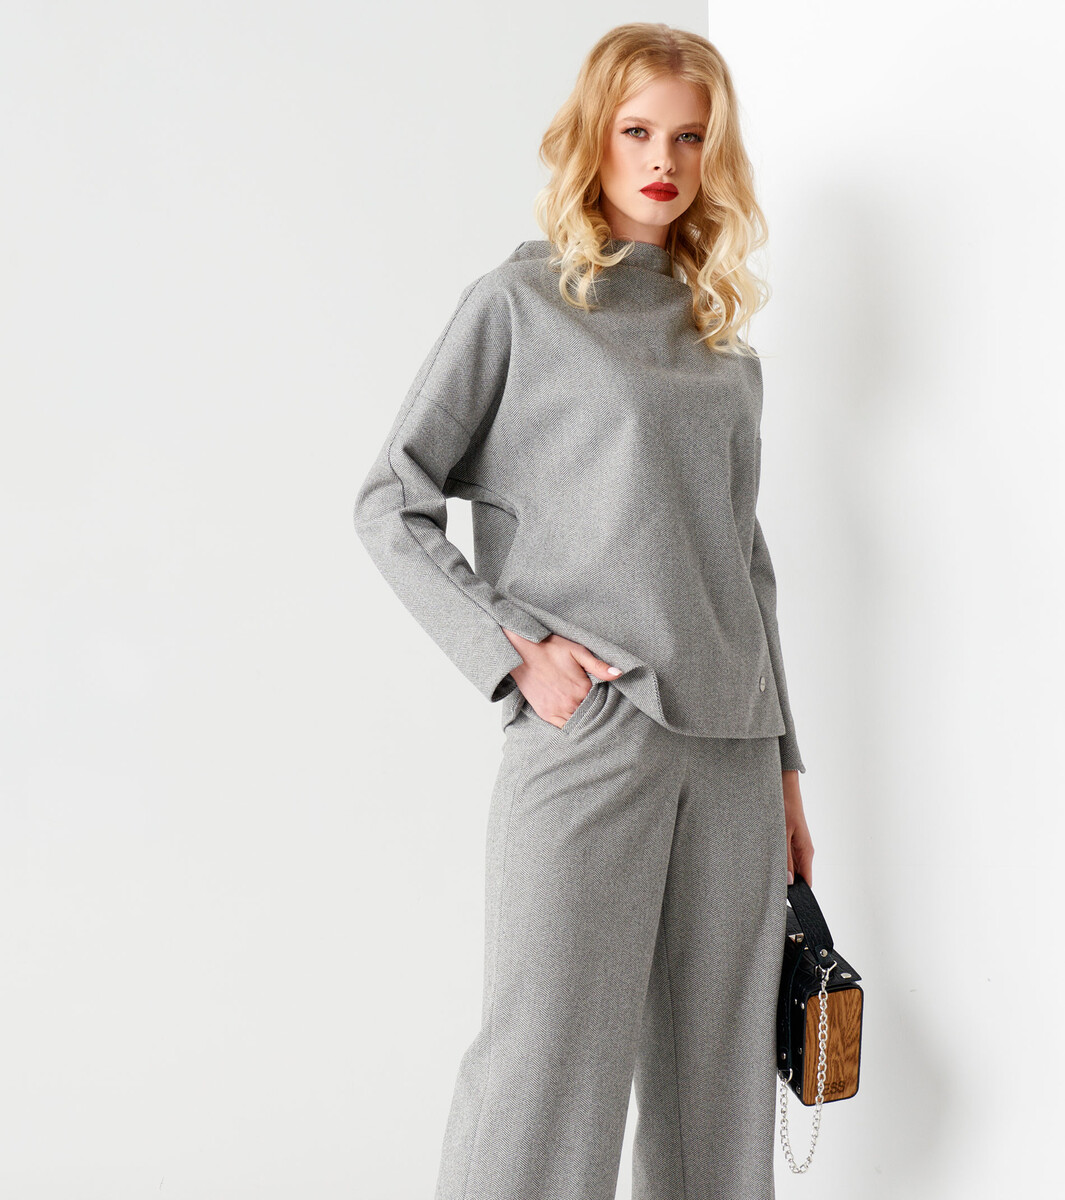 Комплект женский (туника, брюки) PANDA, размер 42, цвет серый 01121973 - фото 2